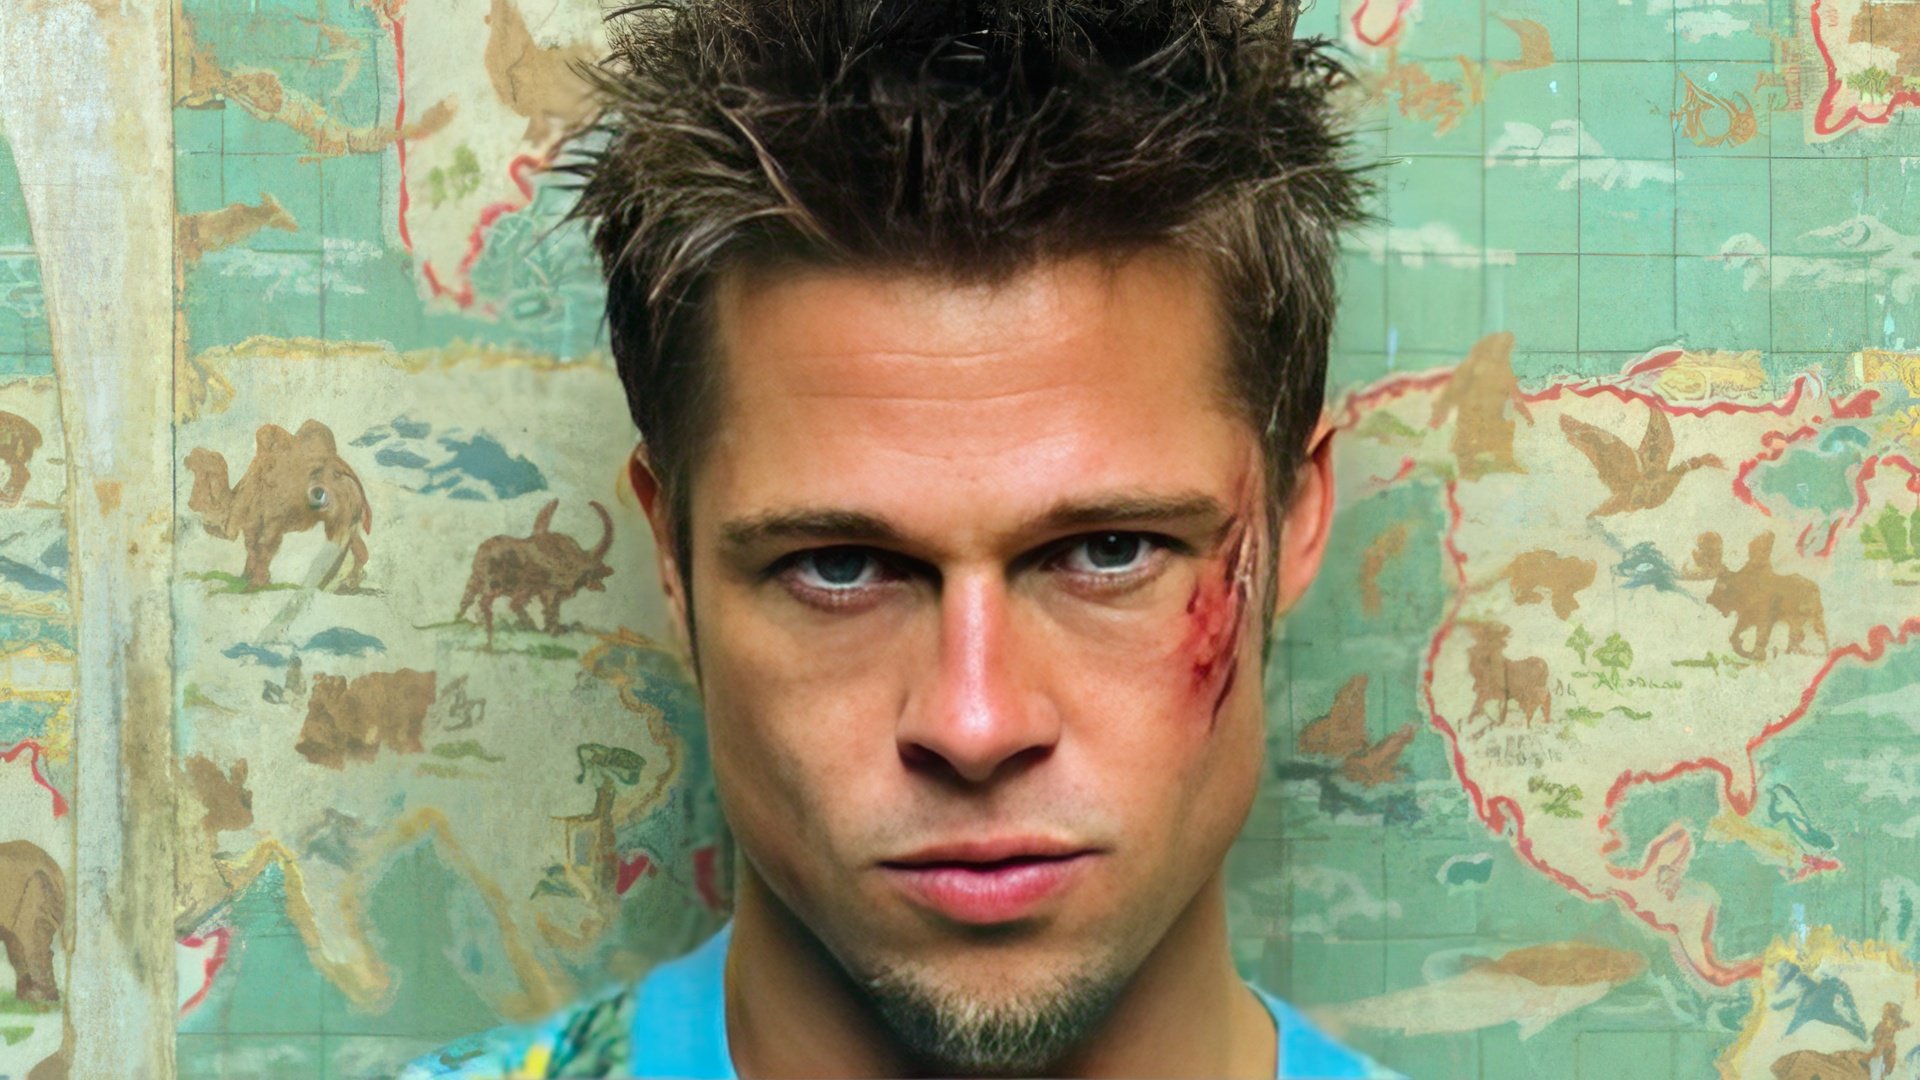 “Fight Club”: Brad Pitt as Tyler Durden